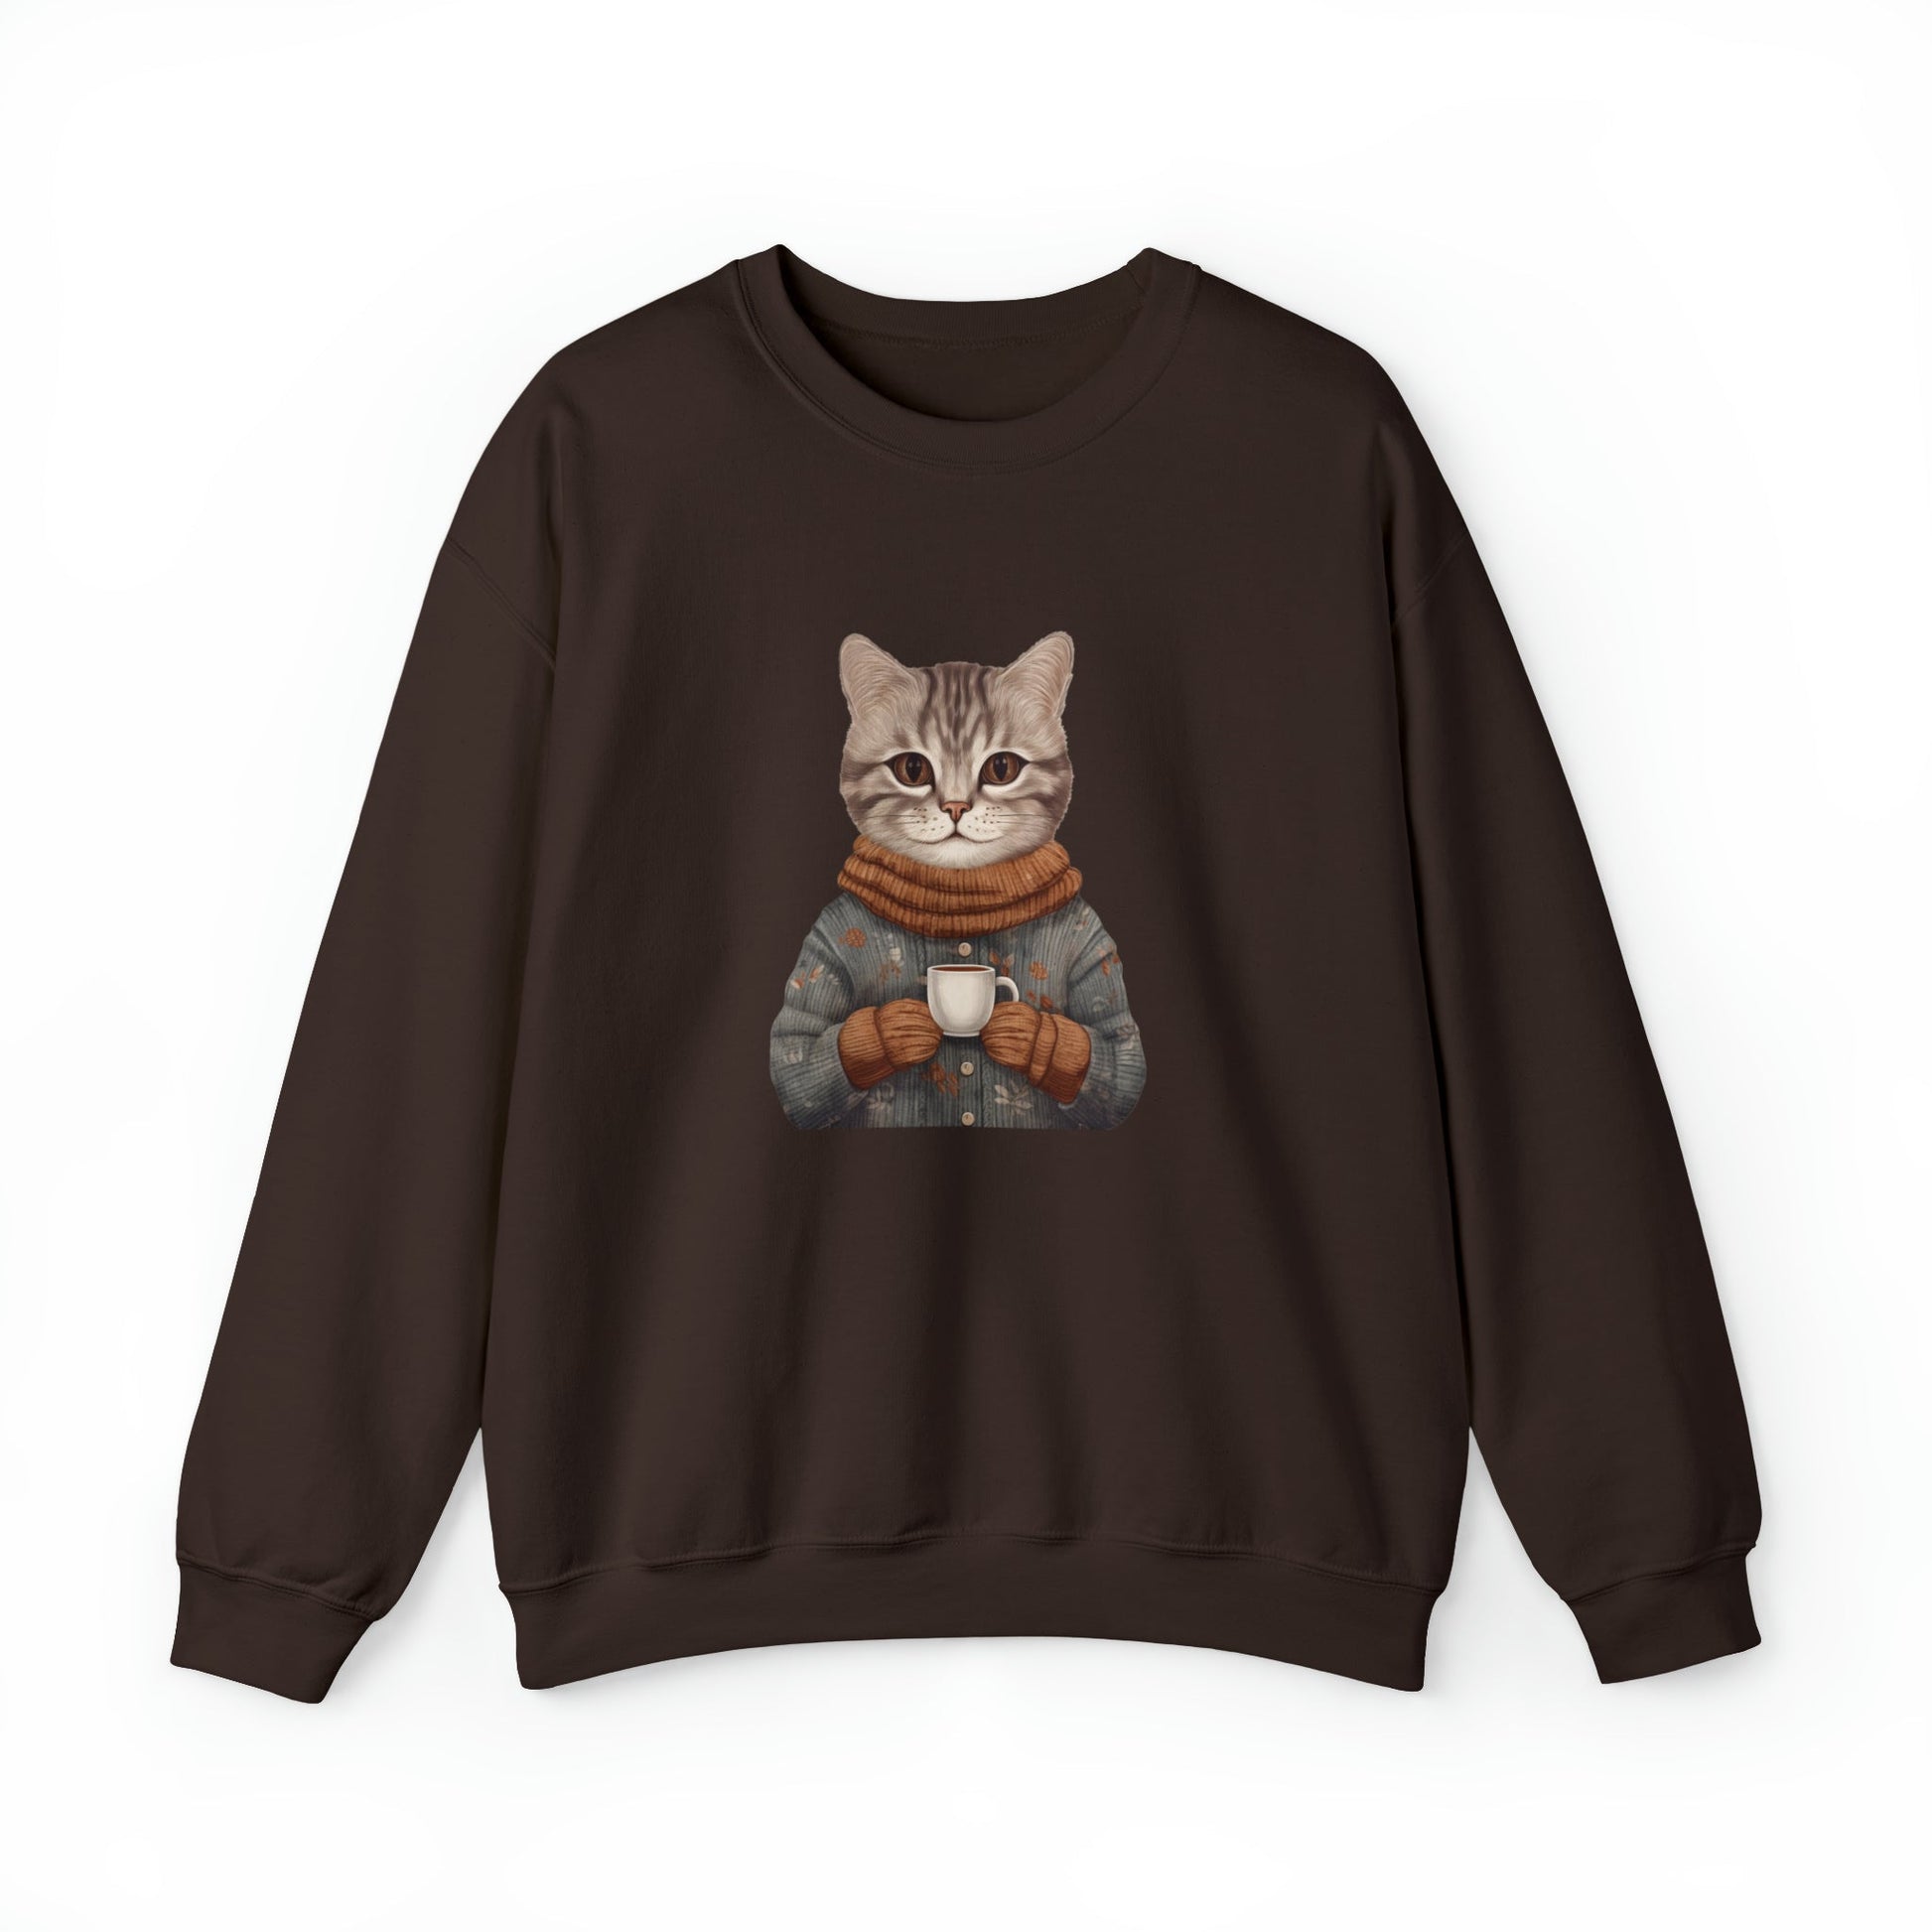 Cute Cat Sweatshirt, Artistic Illustration of a Cat in a Sweater, Beautiful Astethic Cat Drawing - FlooredByArt